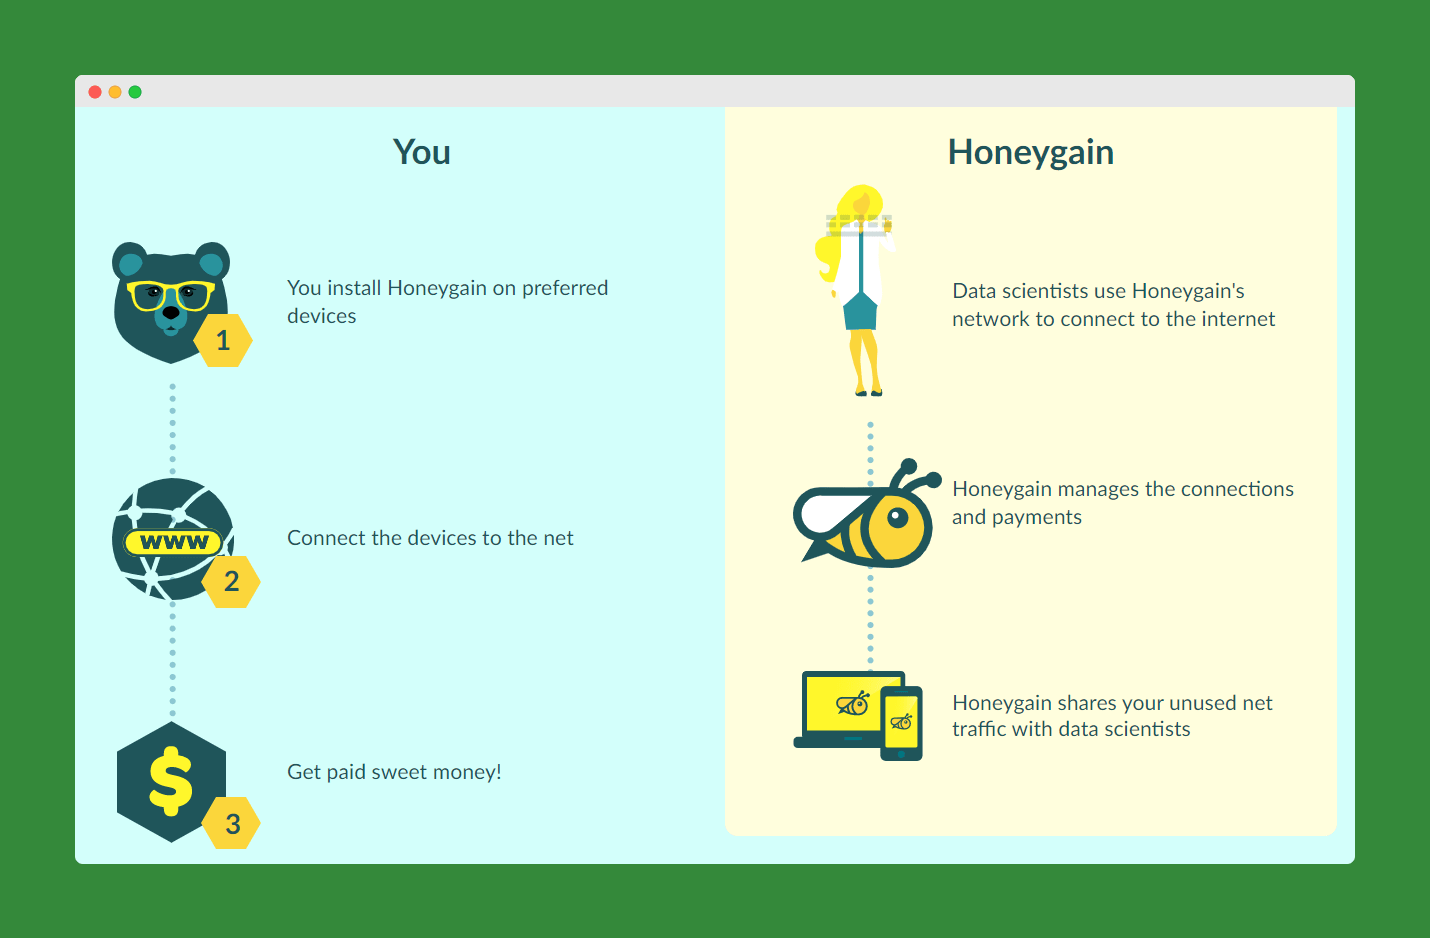 honeygain review